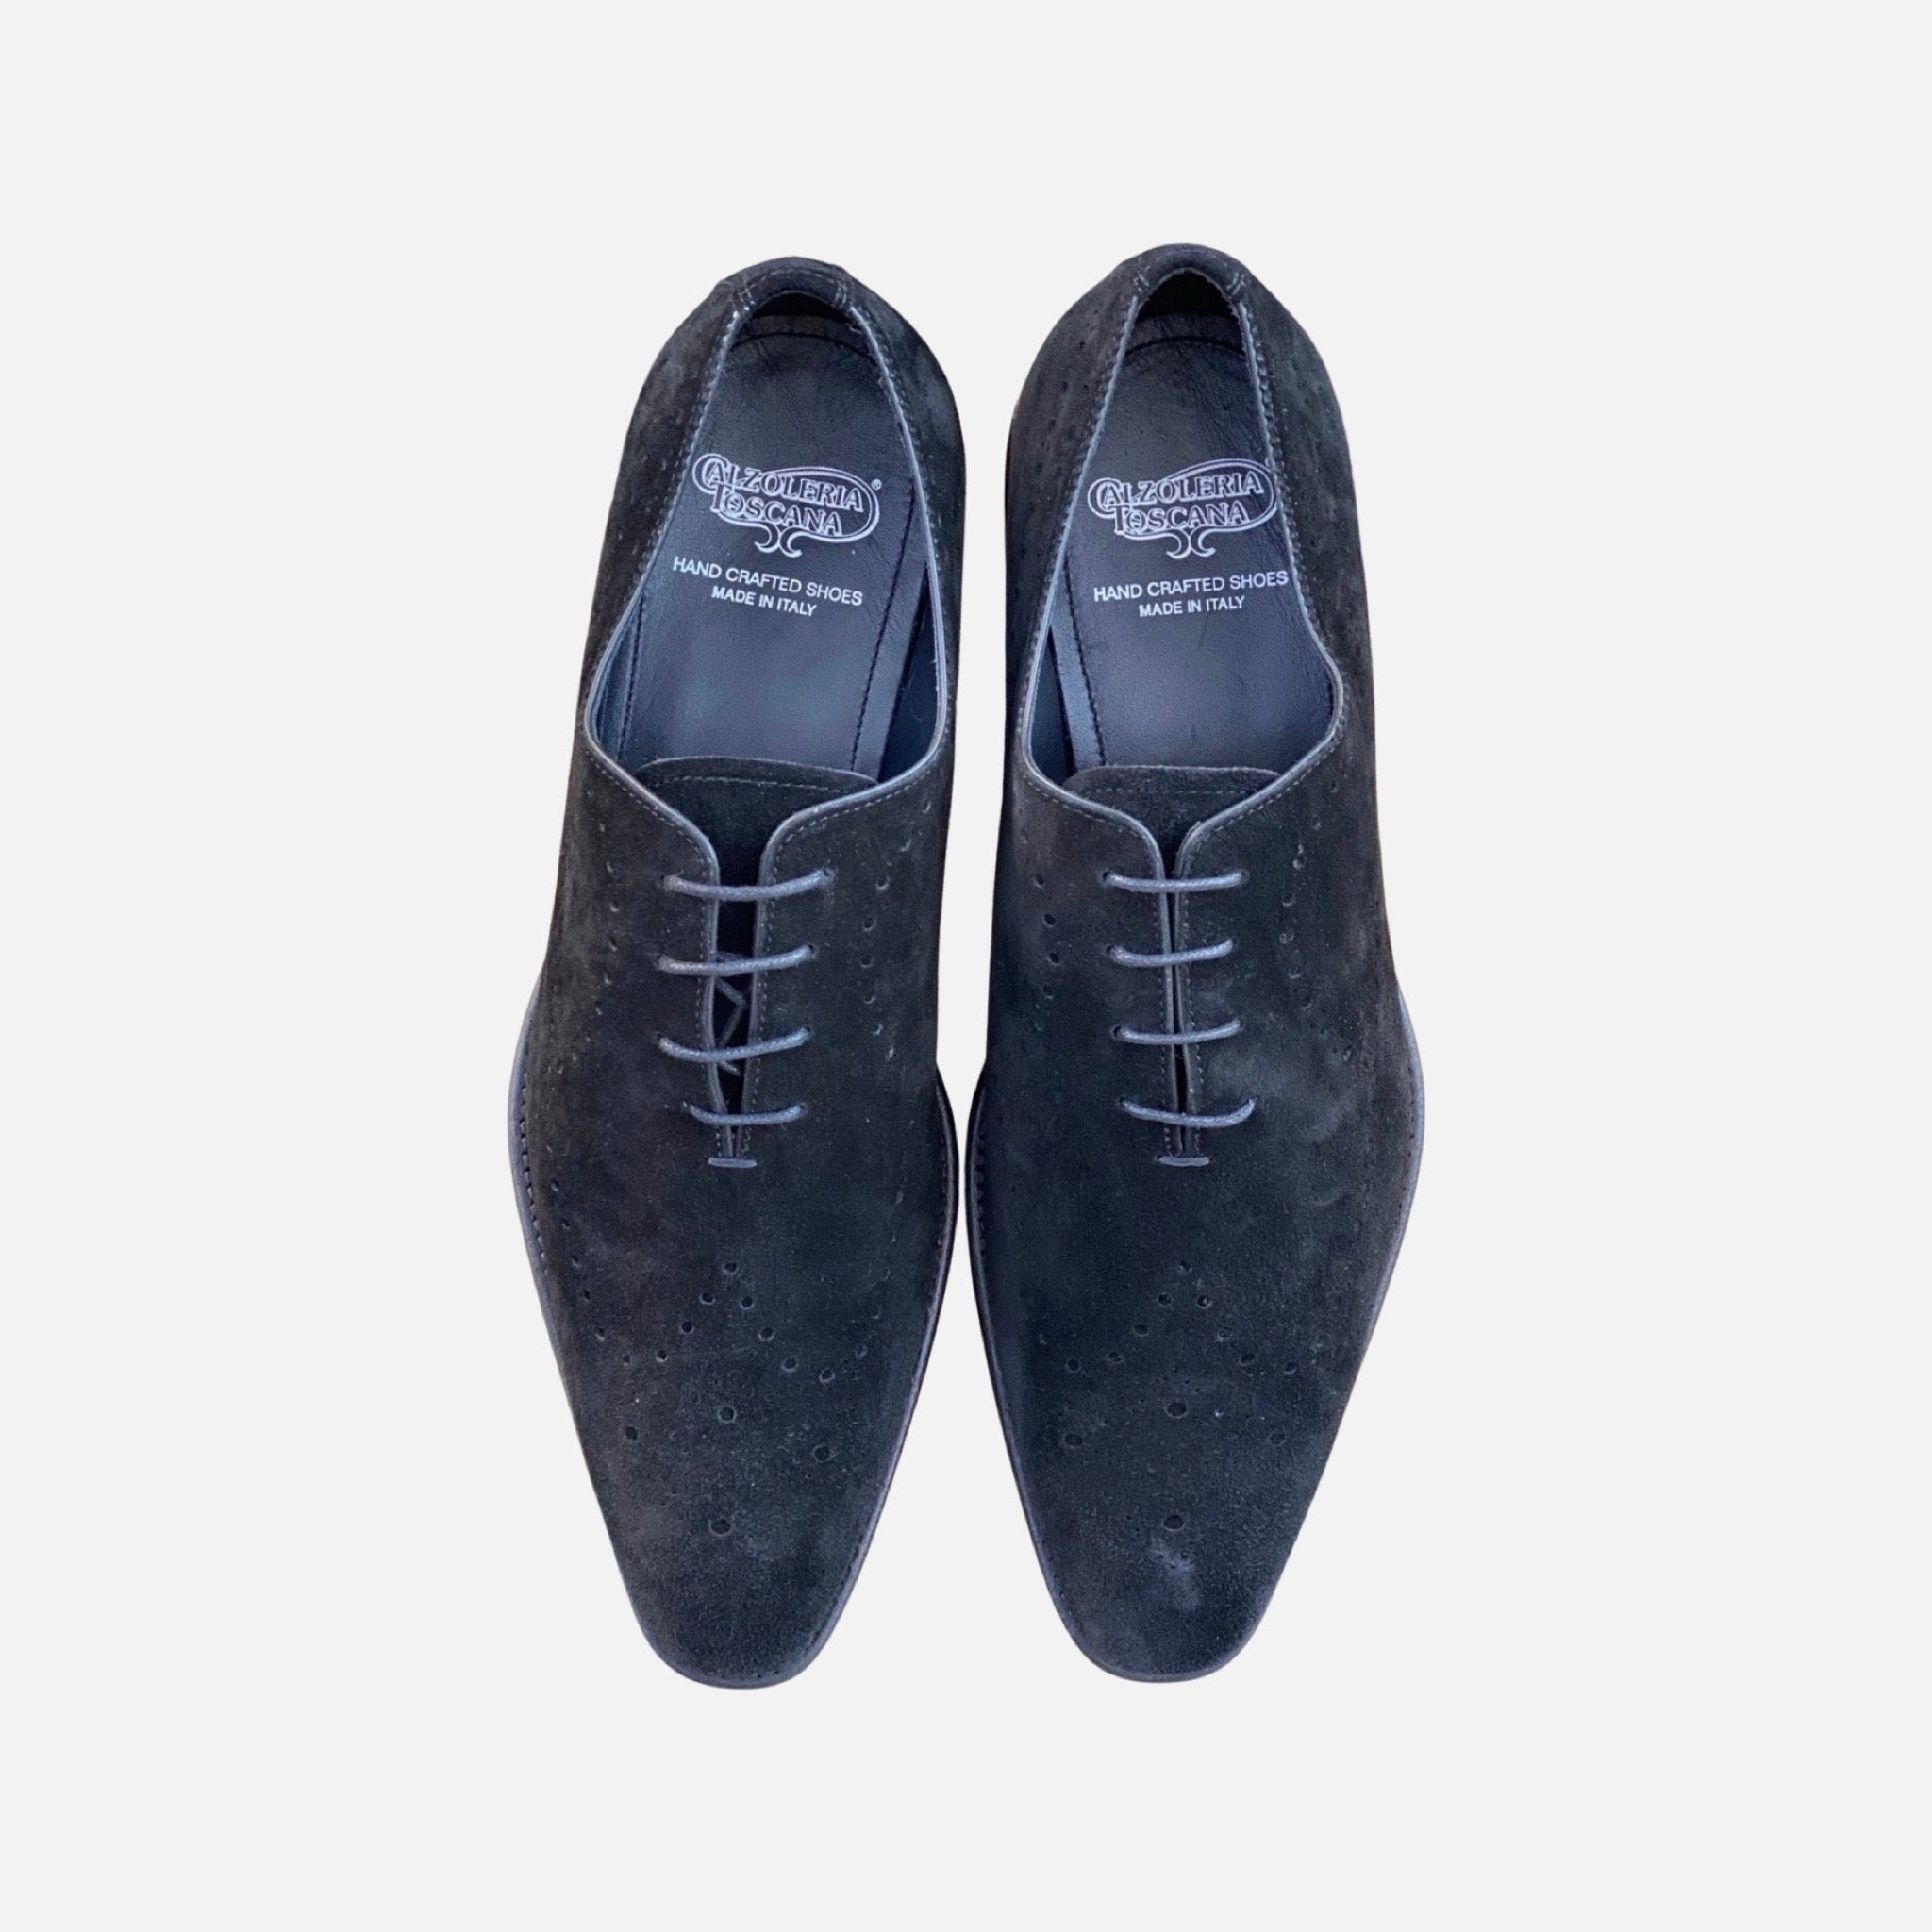 Calzoleria Toscana Clearance Sale: Calzoleria Toscana Men's Black Suede Lace-up Shoes - Handcrafted Italian Elegance